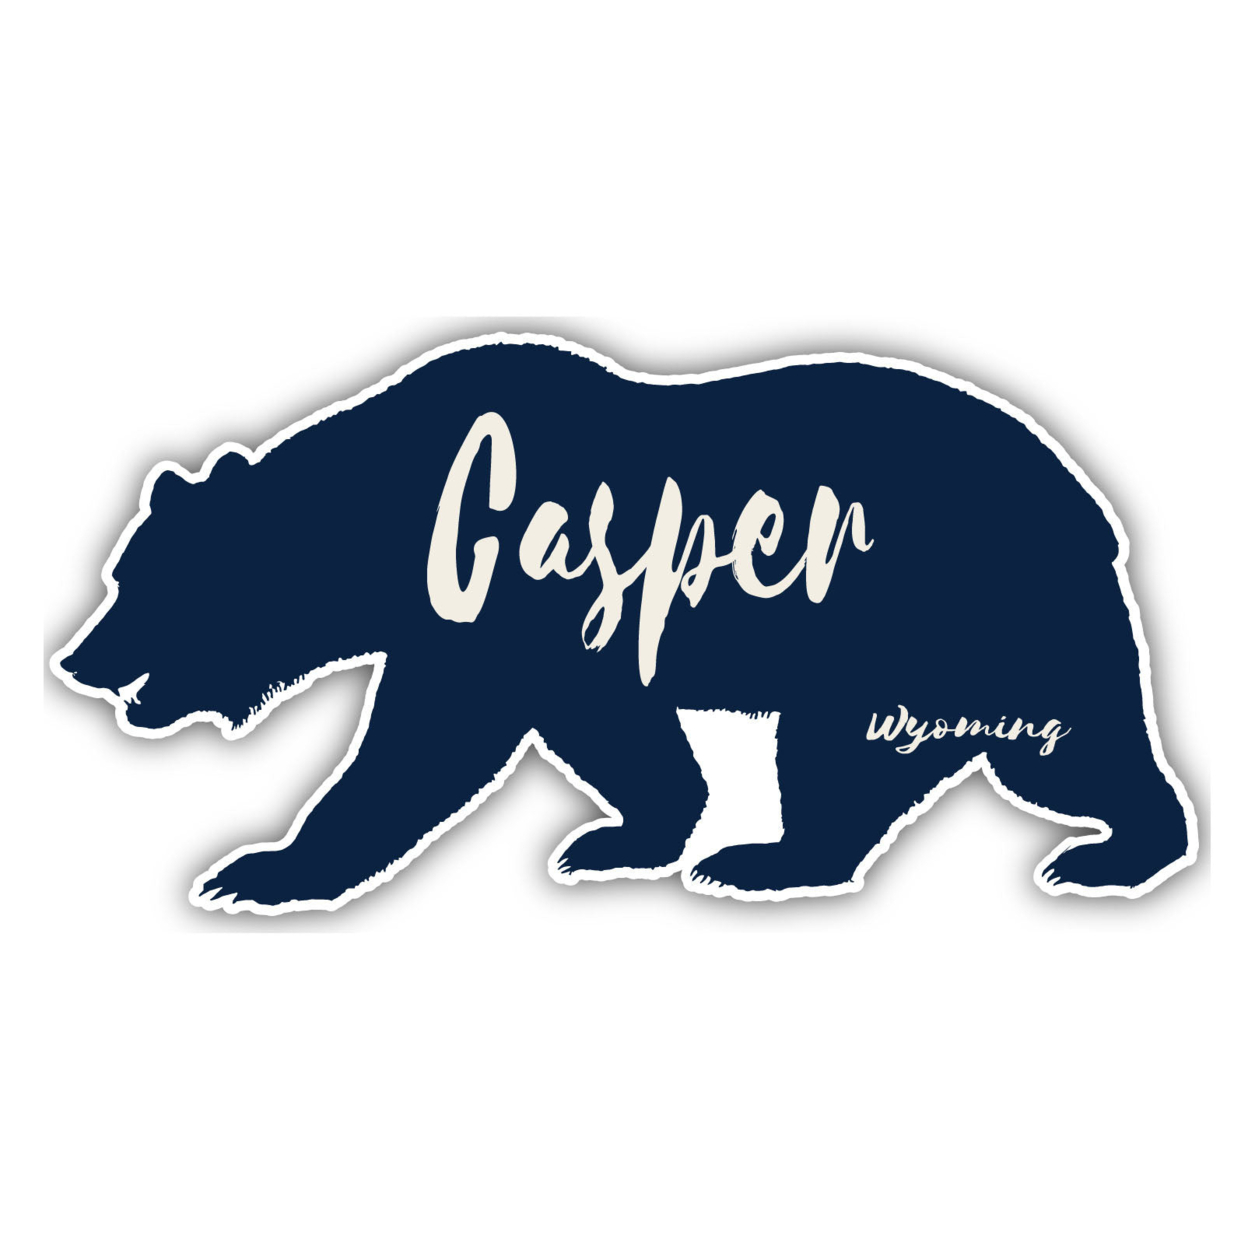 Casper Wyoming Souvenir Decorative Stickers (Choose Theme And Size) - Single Unit, 2-Inch, Camp Life